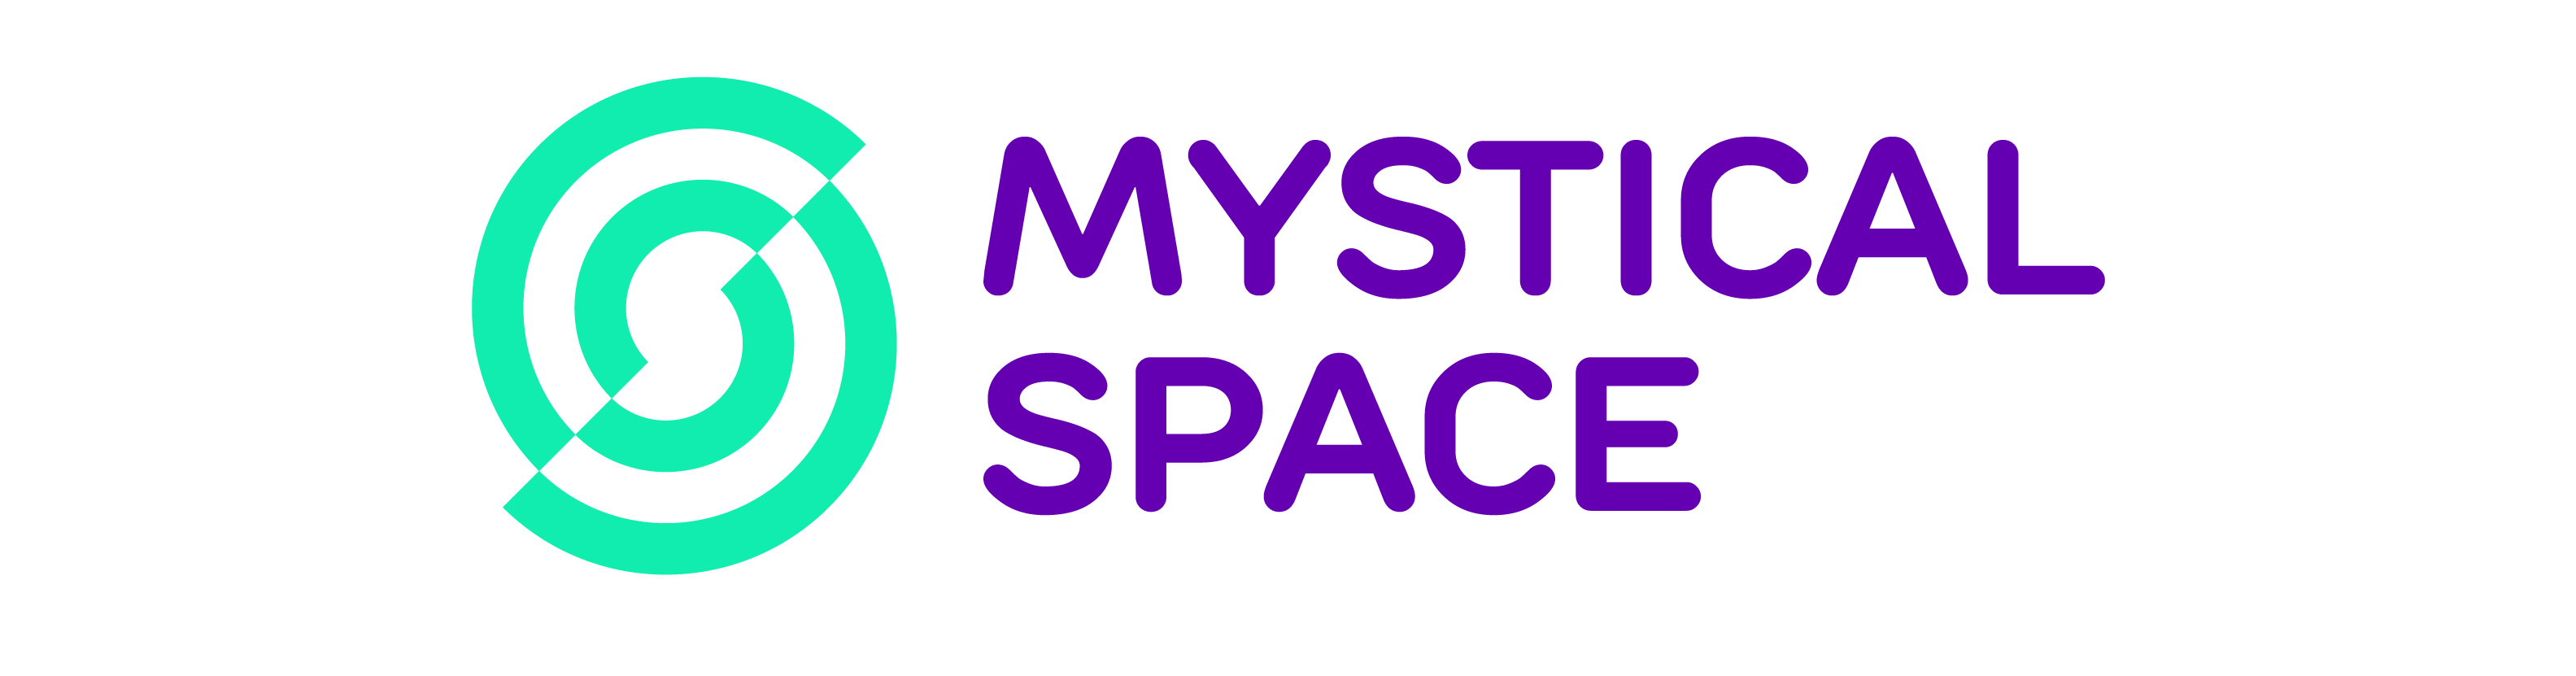 Mystical Space